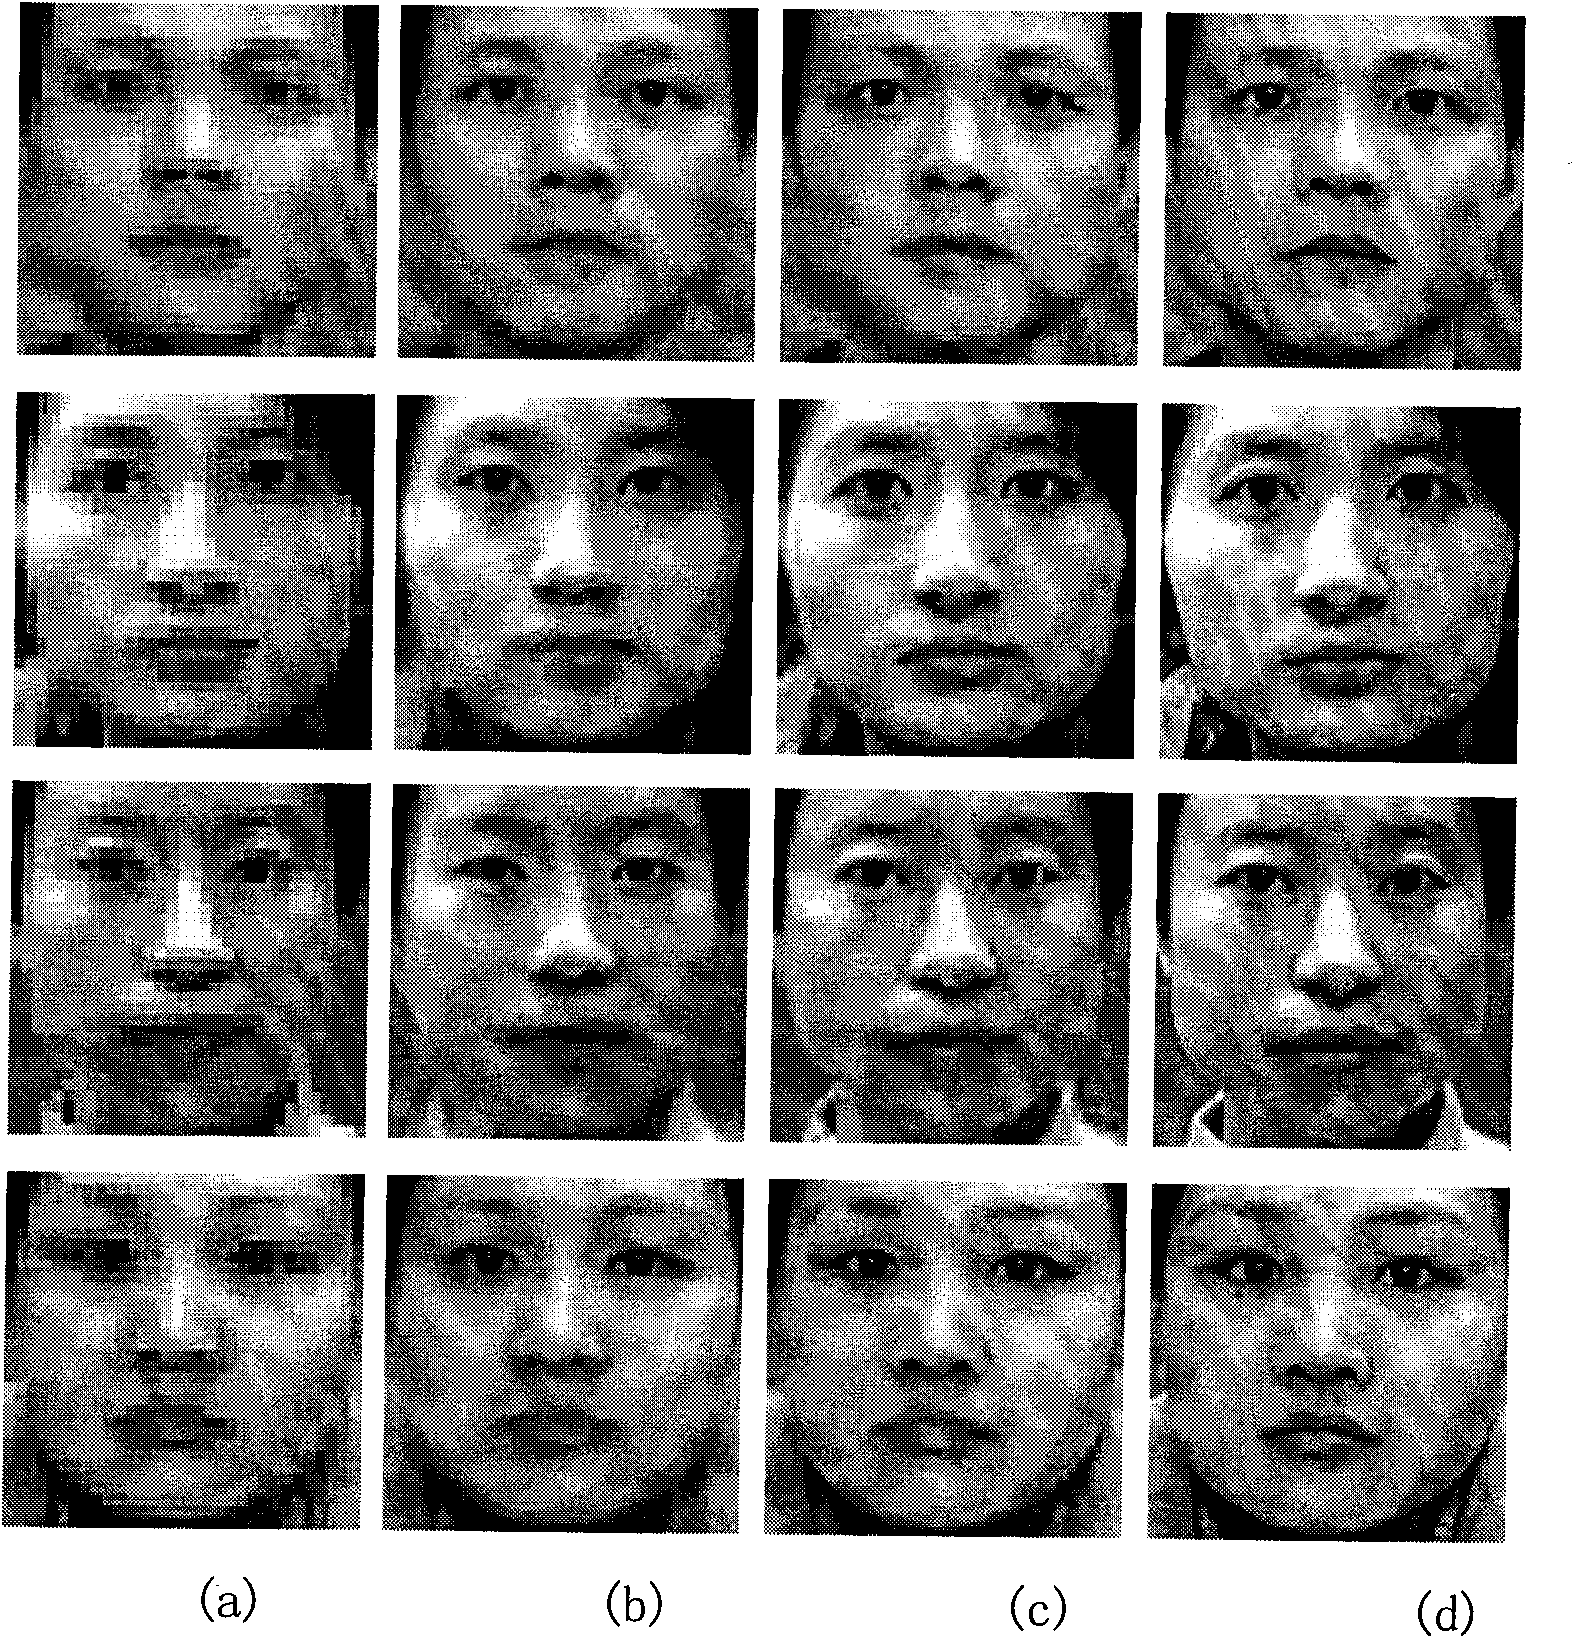 Face image super-resolution reconstructing method based on canonical correlation analysis